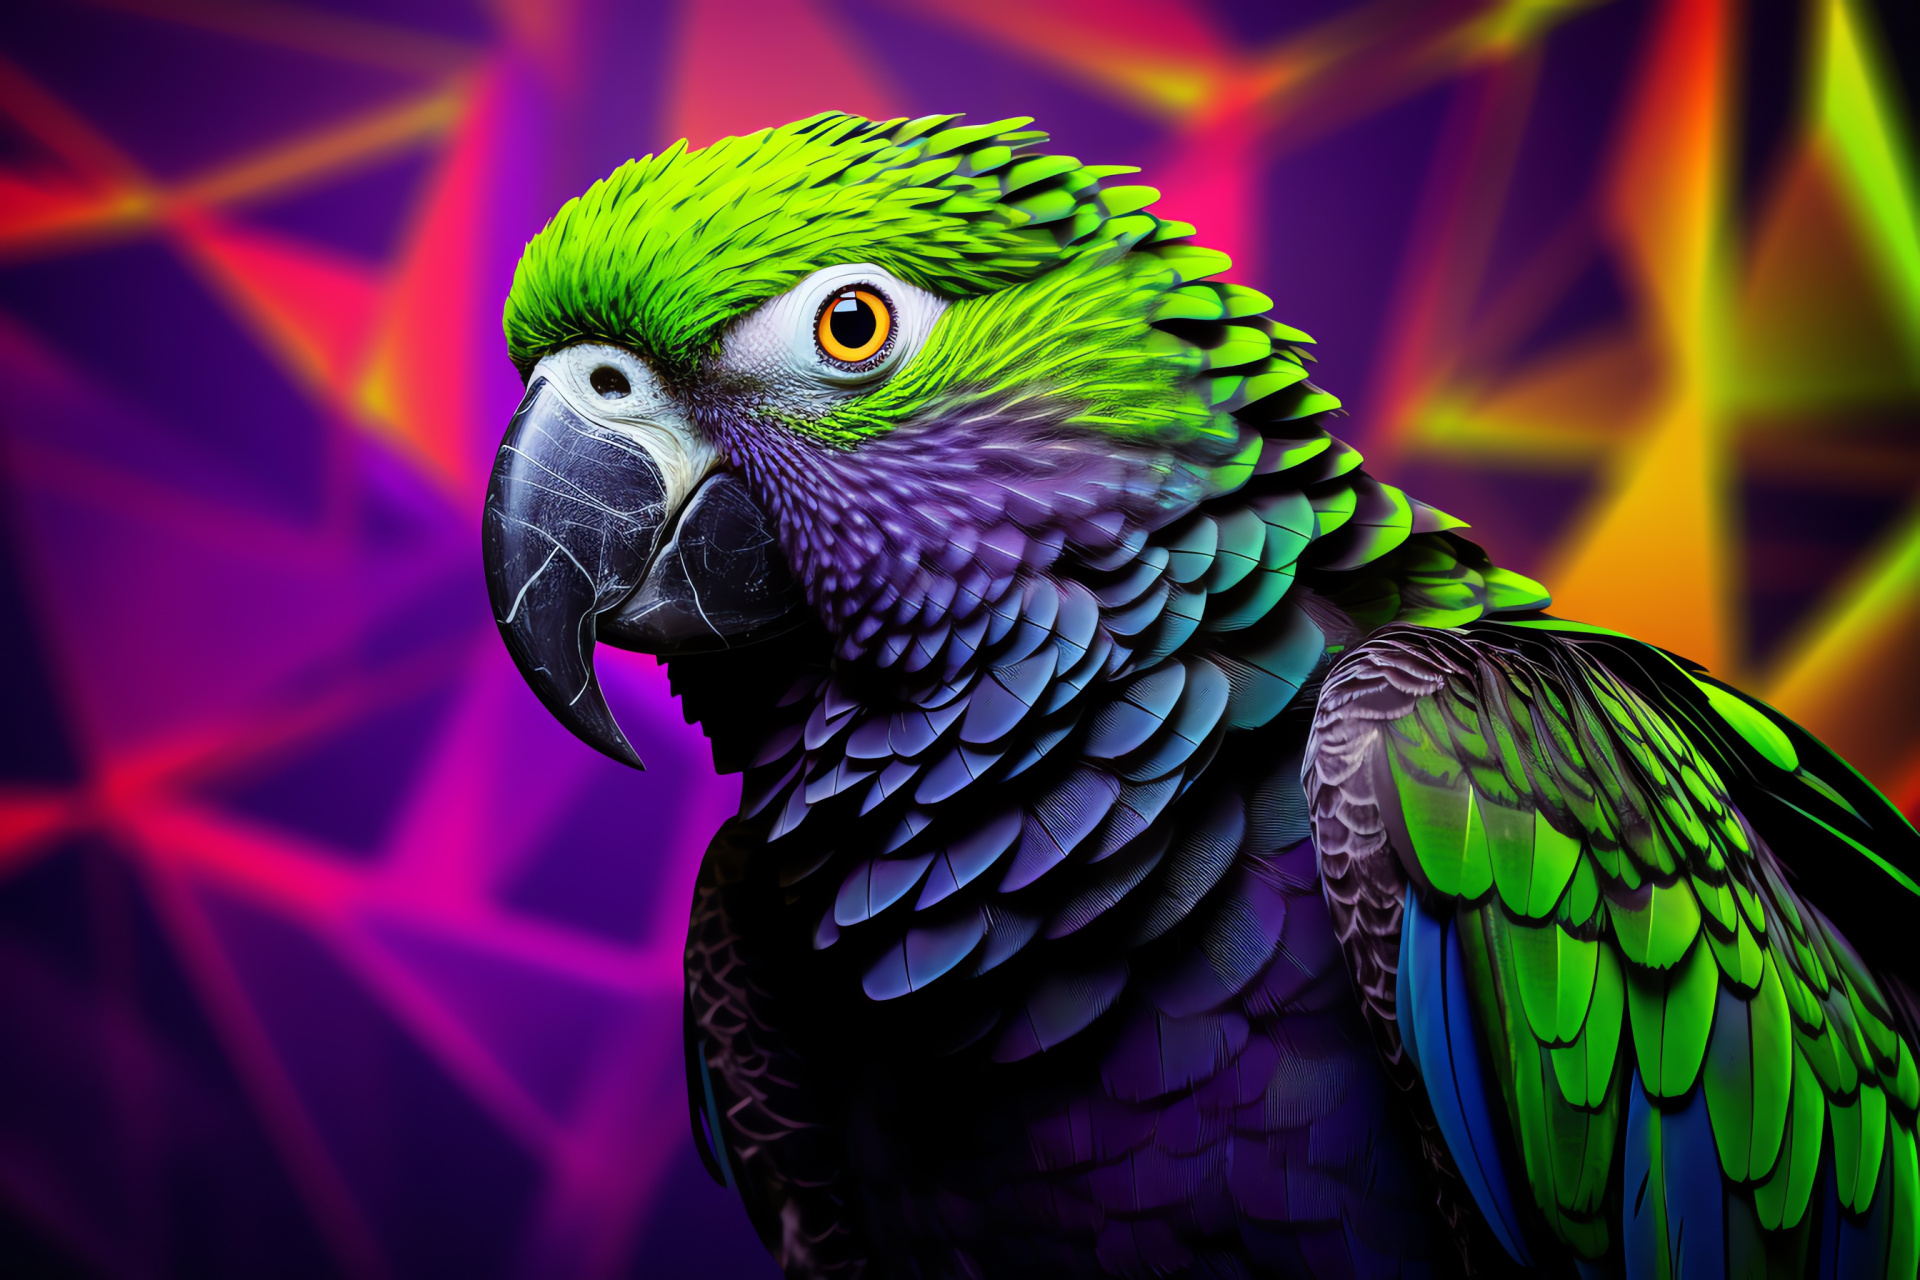 Perched parrot, Unique coloration, Tropical bird, Avian enthusiast, Wildlife beauty, HD Desktop Wallpaper